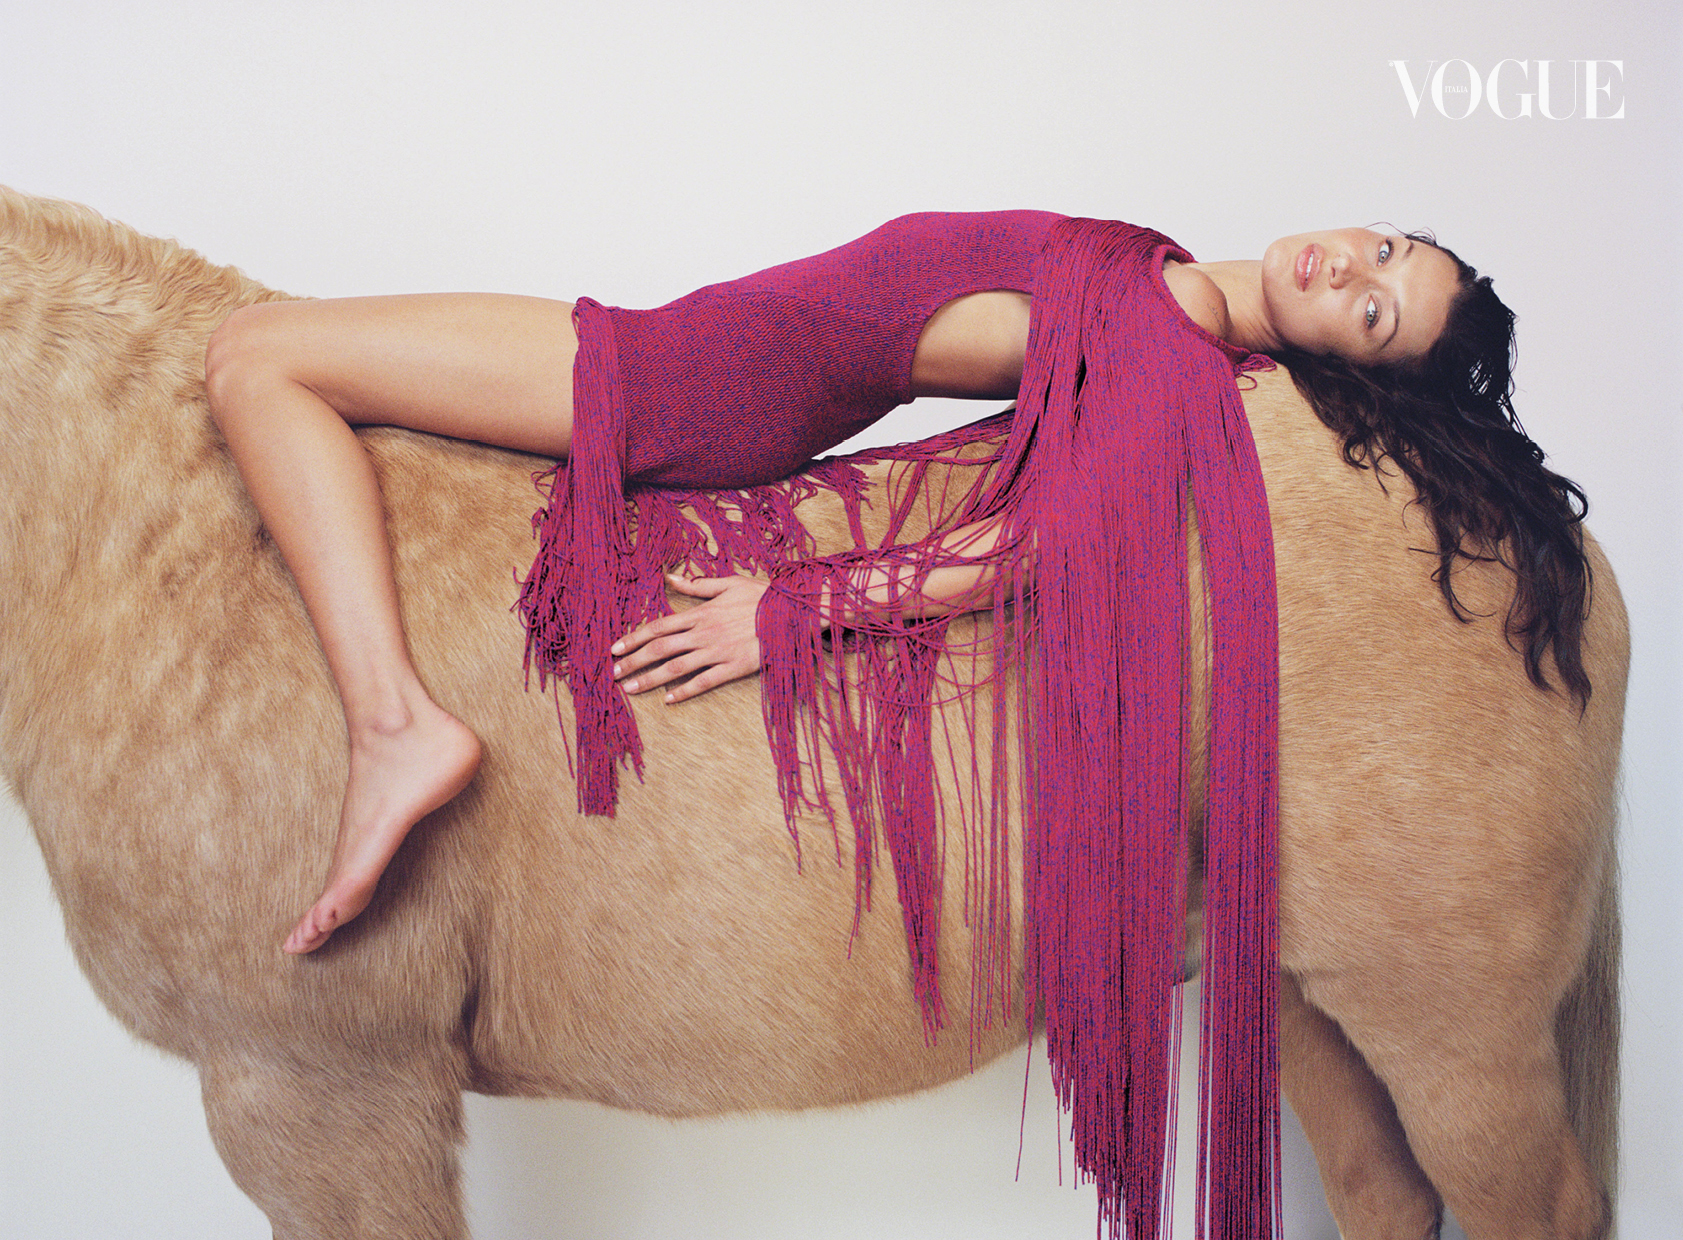 Bella wears a slashed purple dress as she drapes herself over a 'horse'